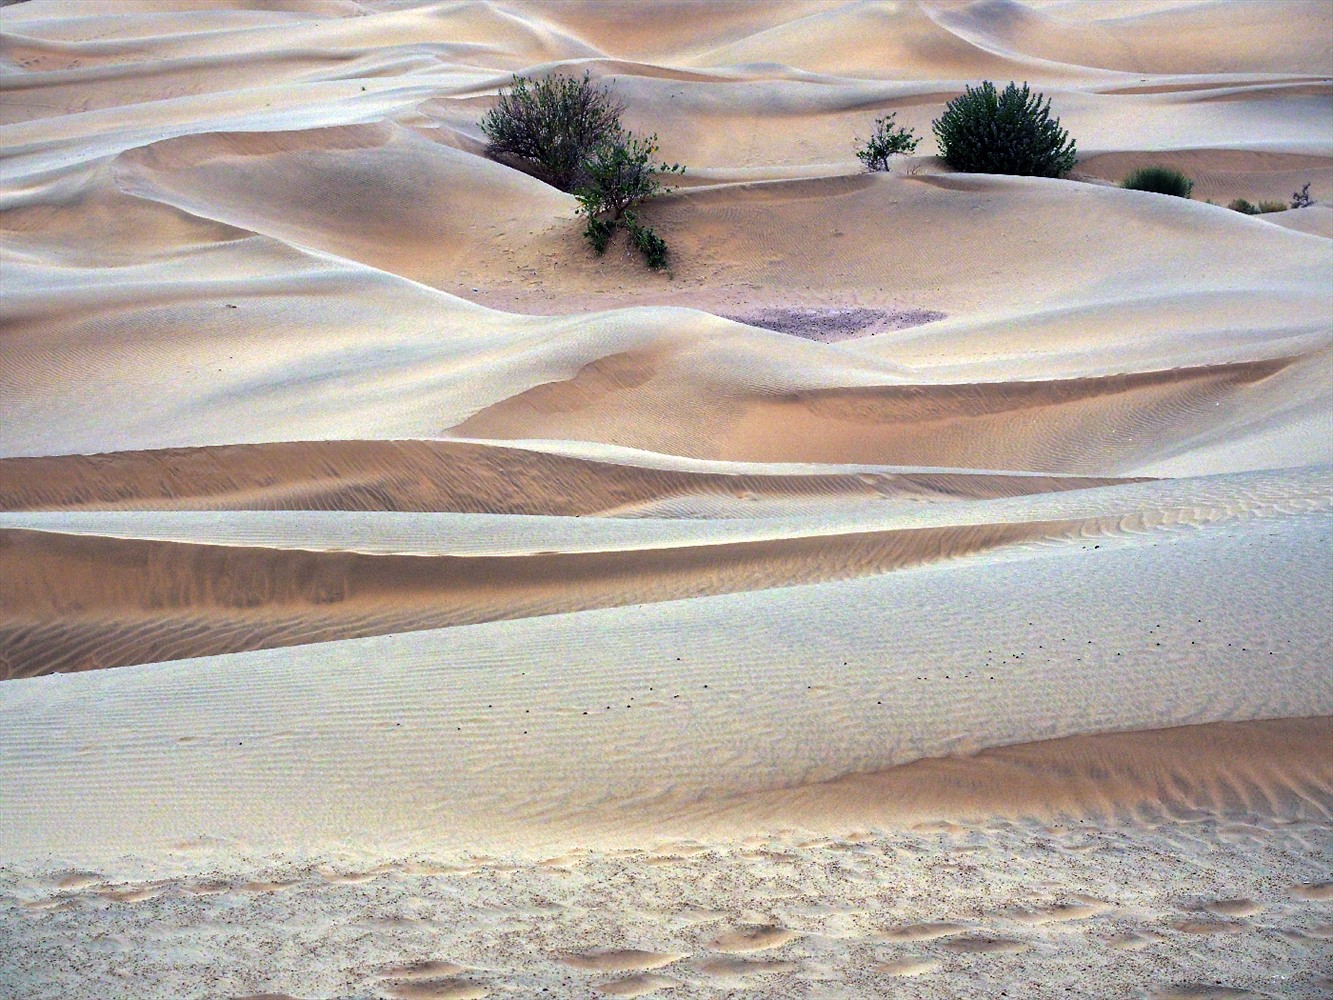 Take a trip to the Rajasthan desert